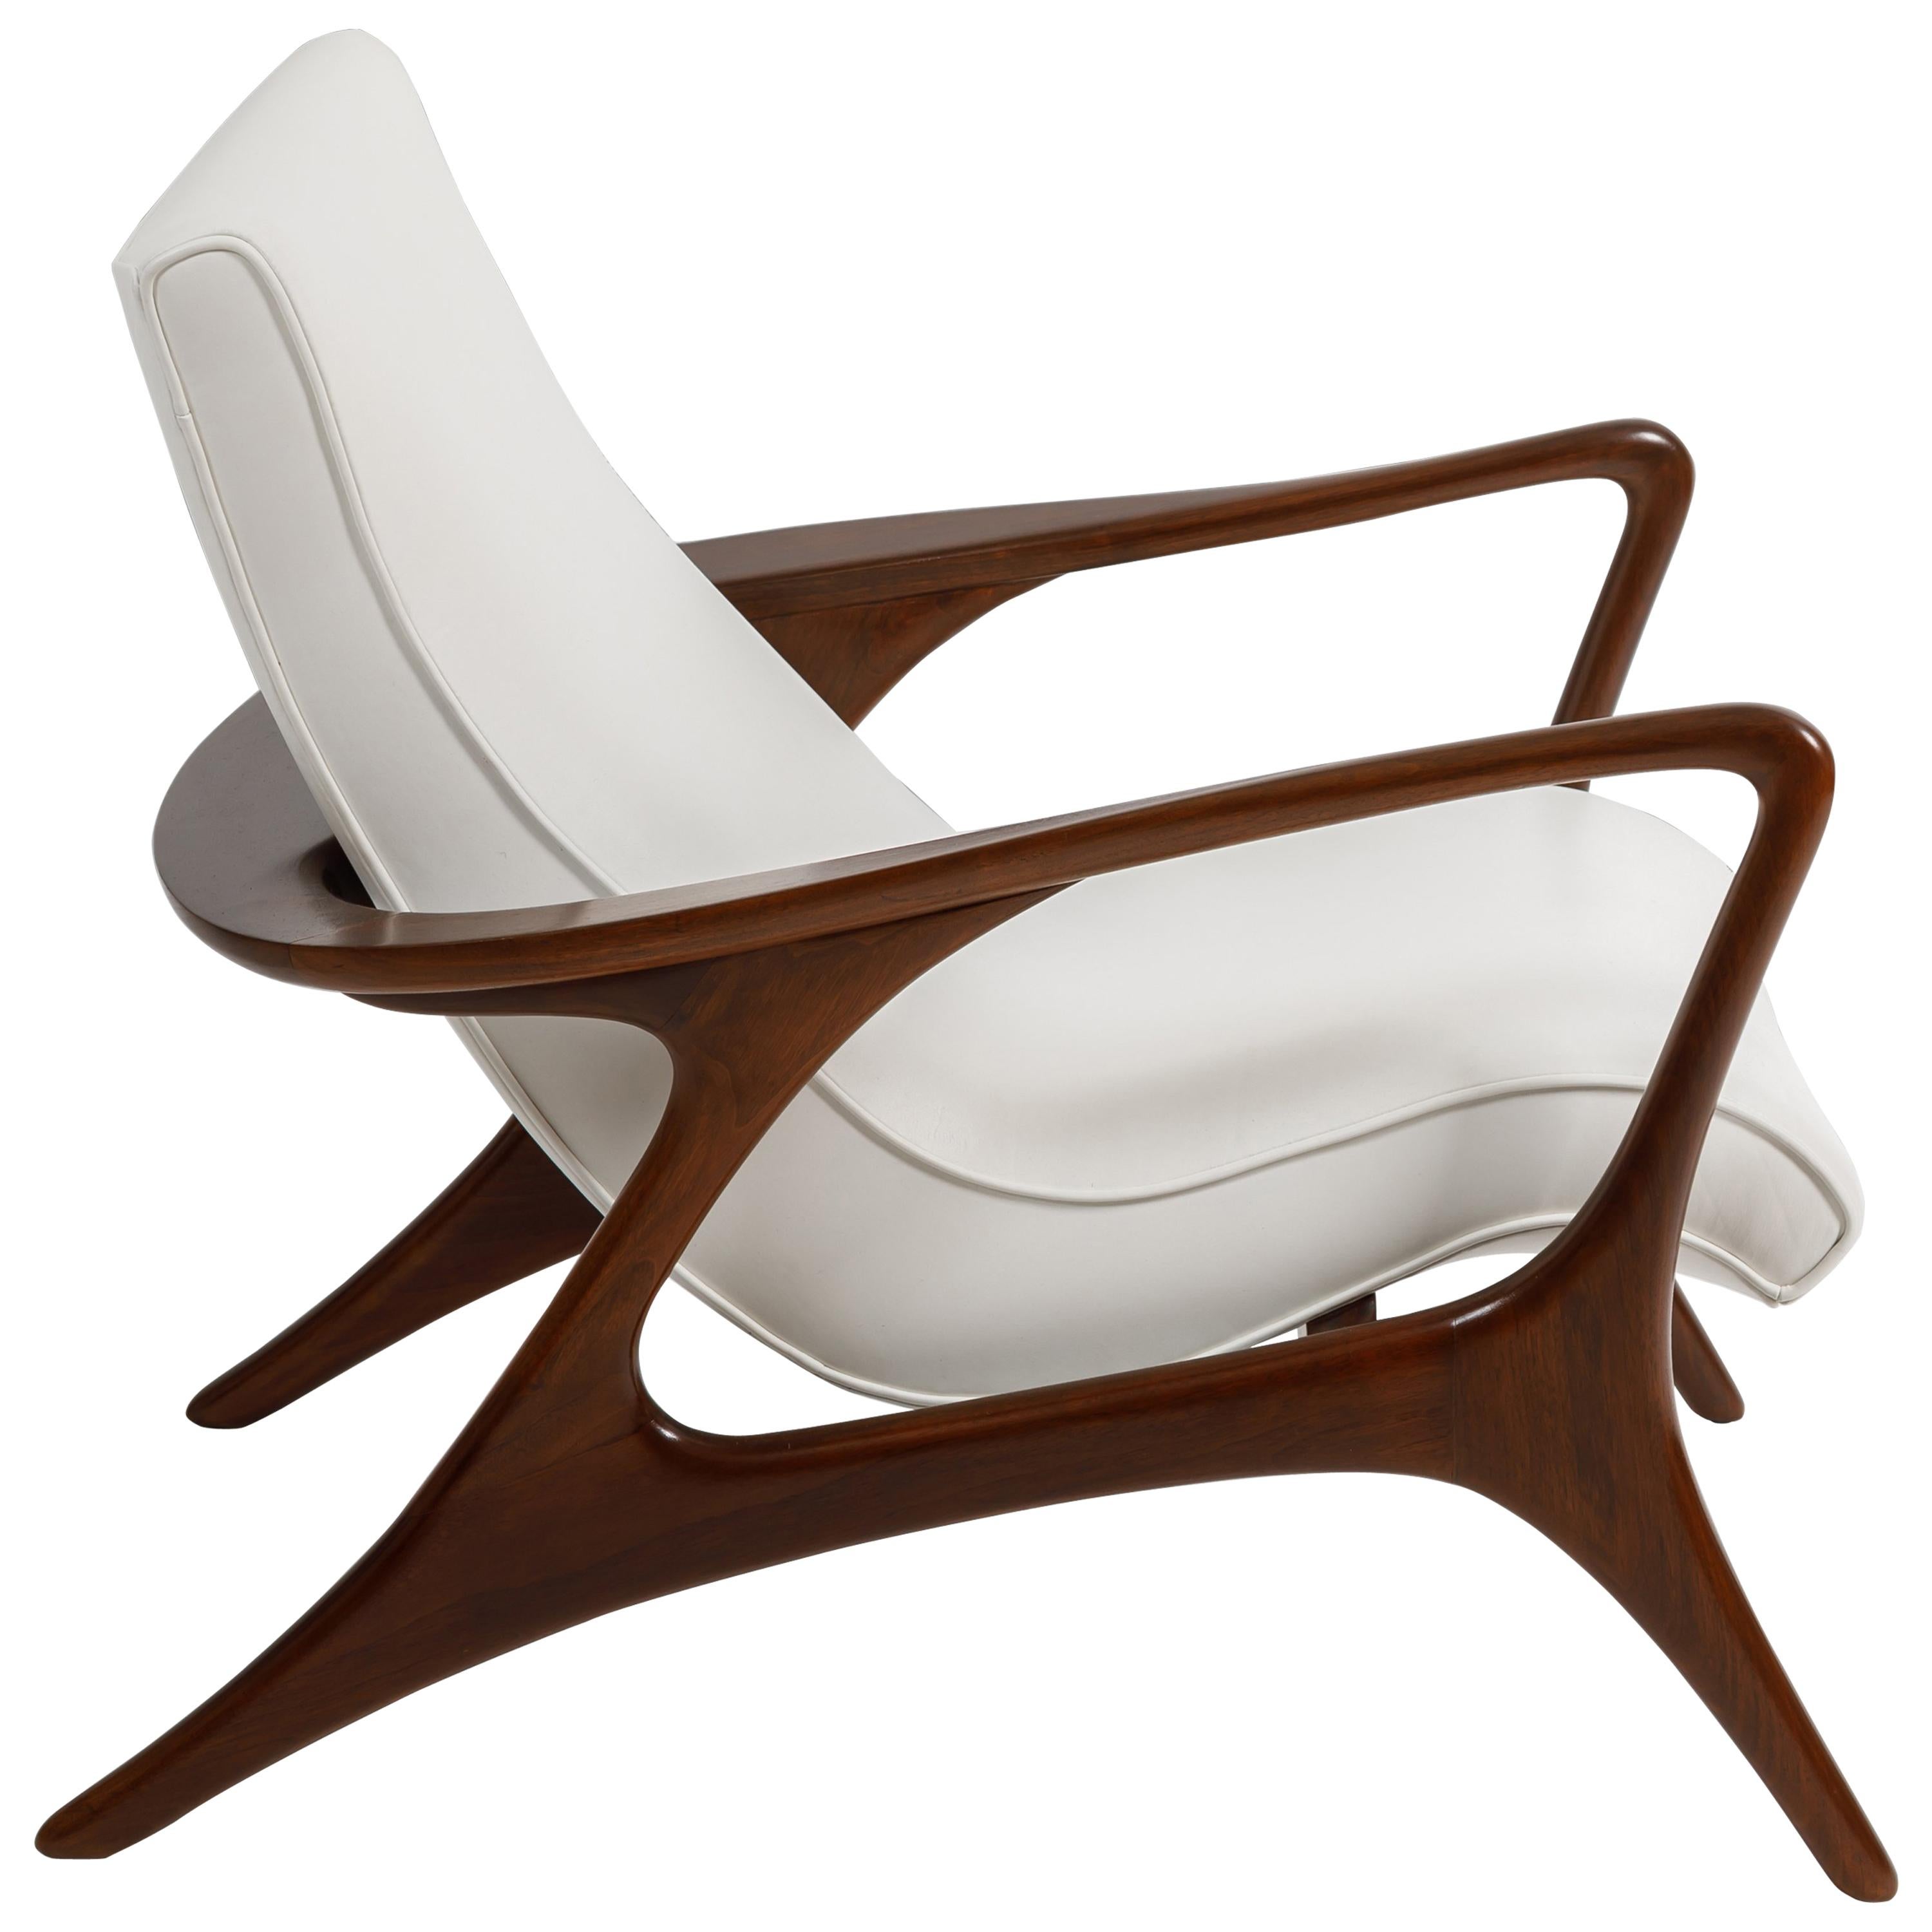 https://a.1stdibscdn.com/early-vladimir-kagan-contour-lounge-chair-for-sale/1121189/f_121337611537881388387/12133761_master.jpg